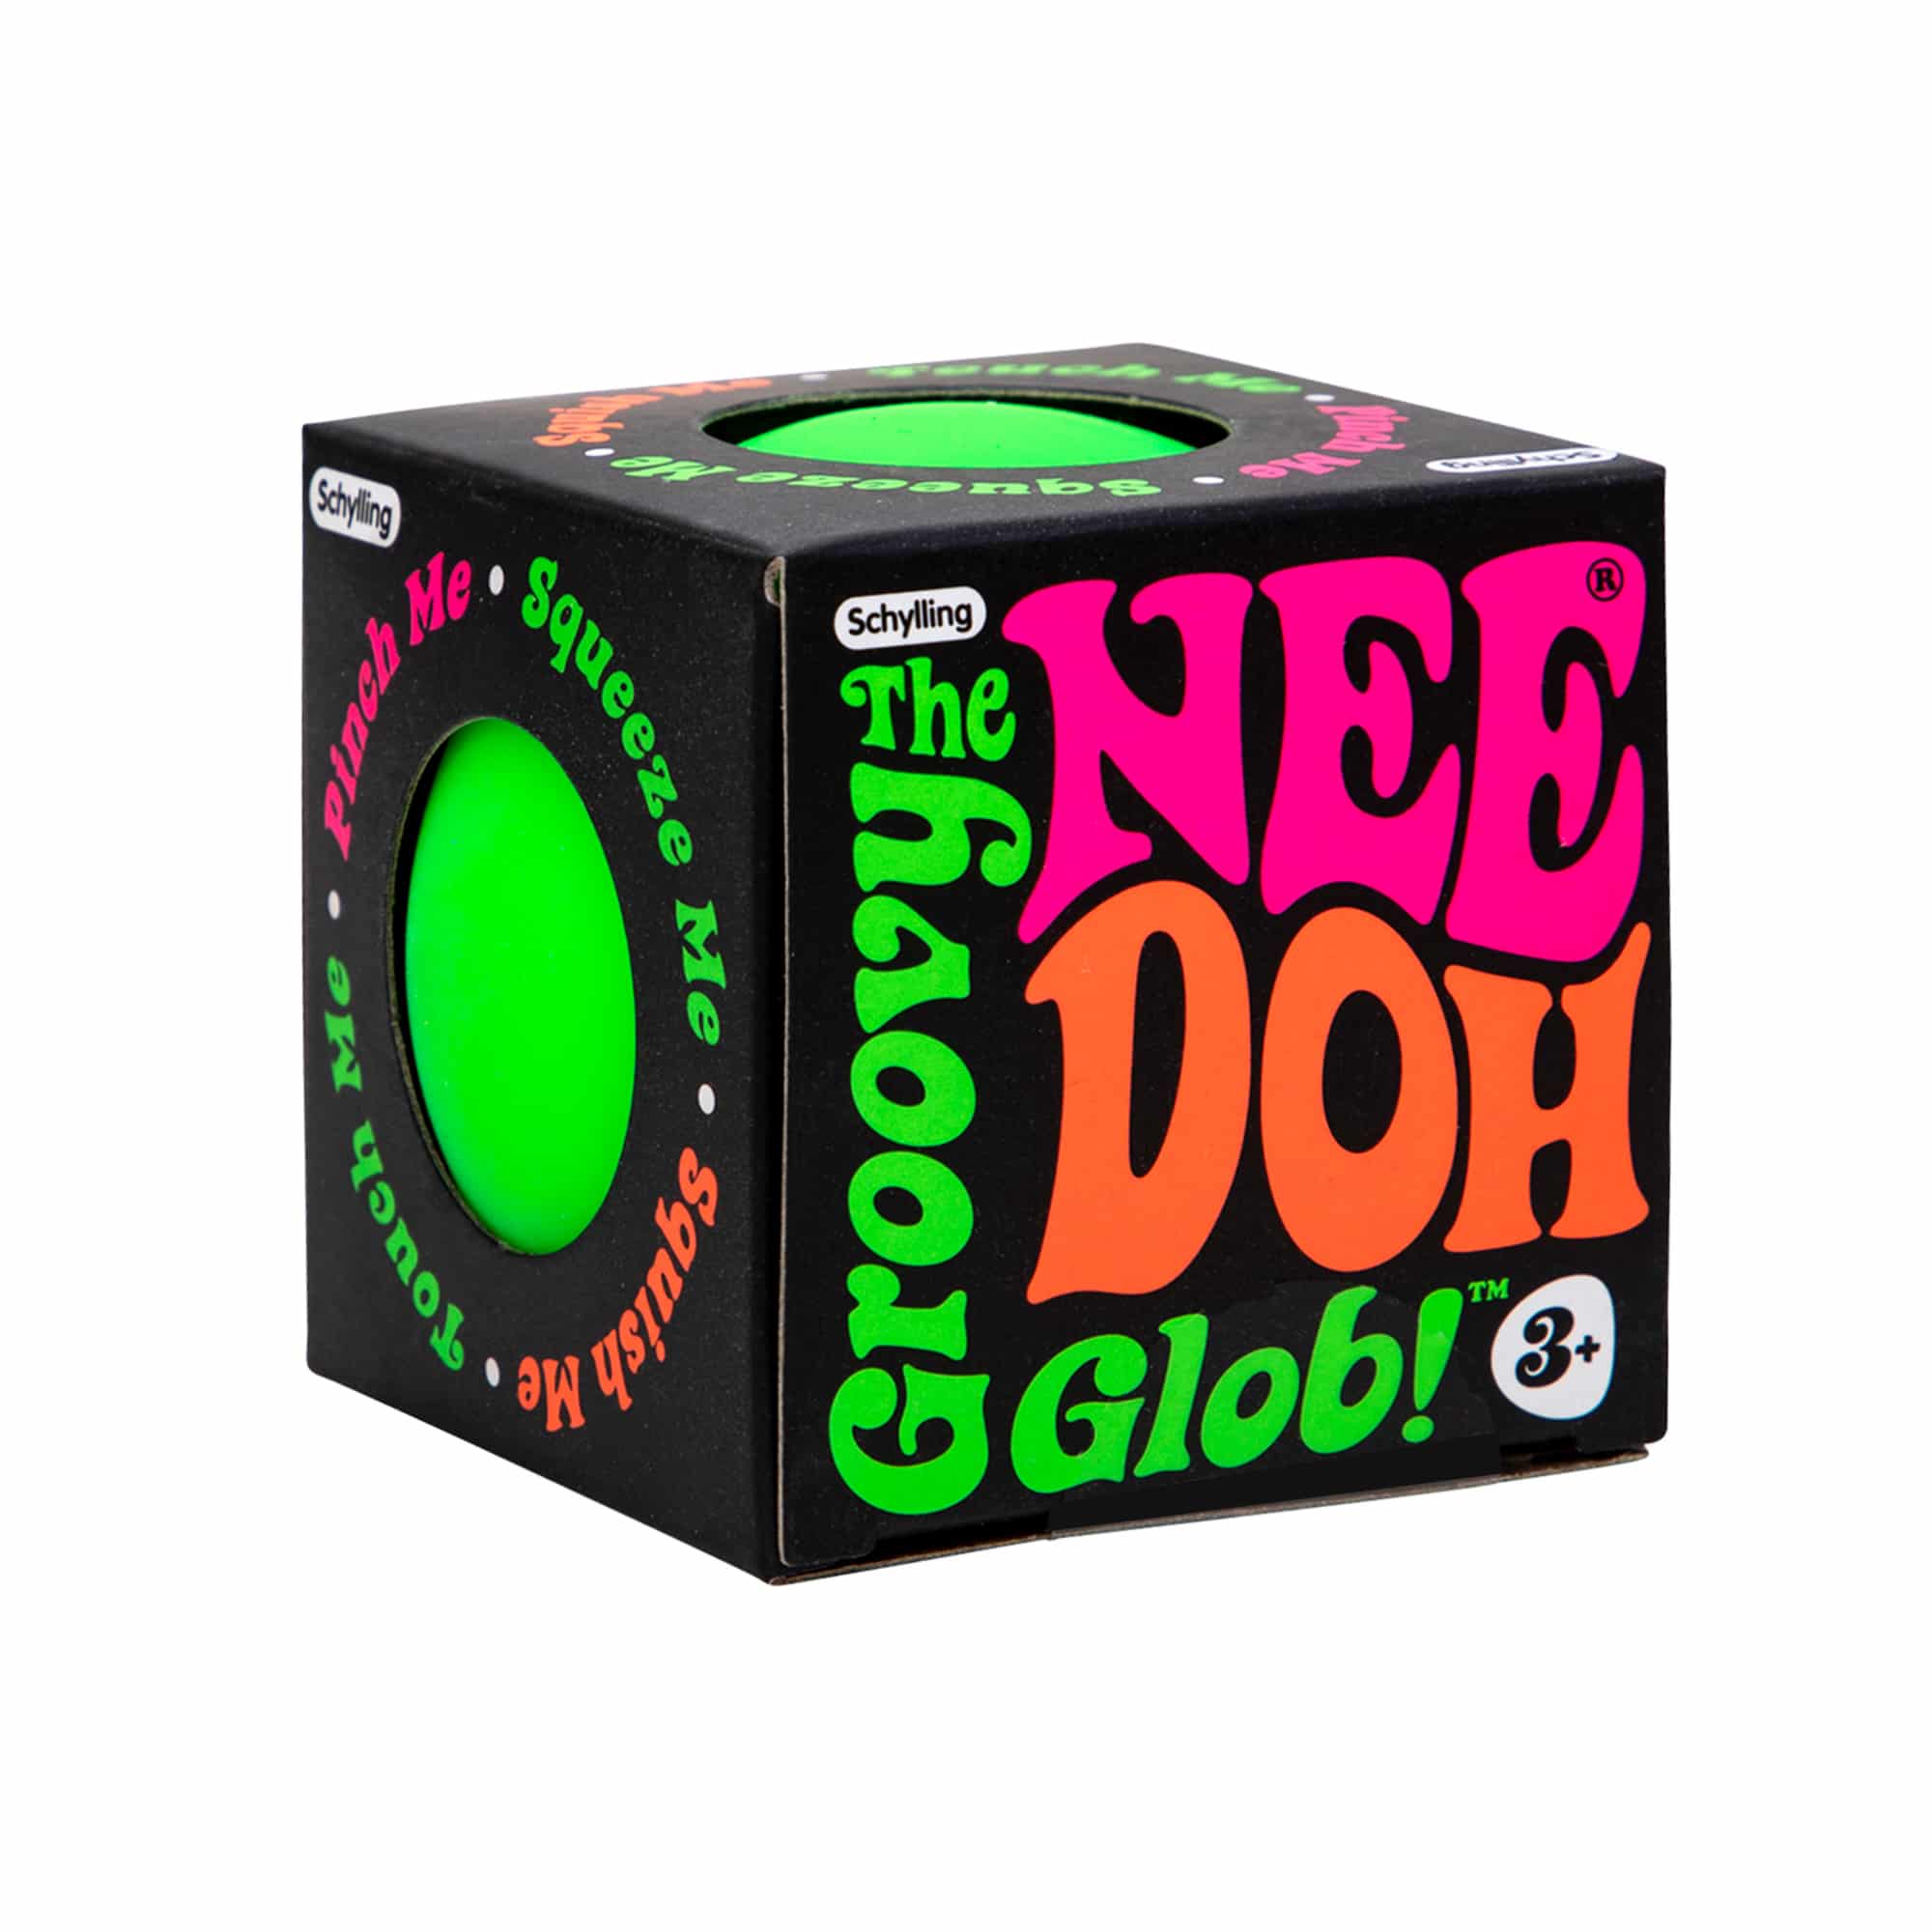 Nee Doh Classic – JadaBug's Kids Boutique